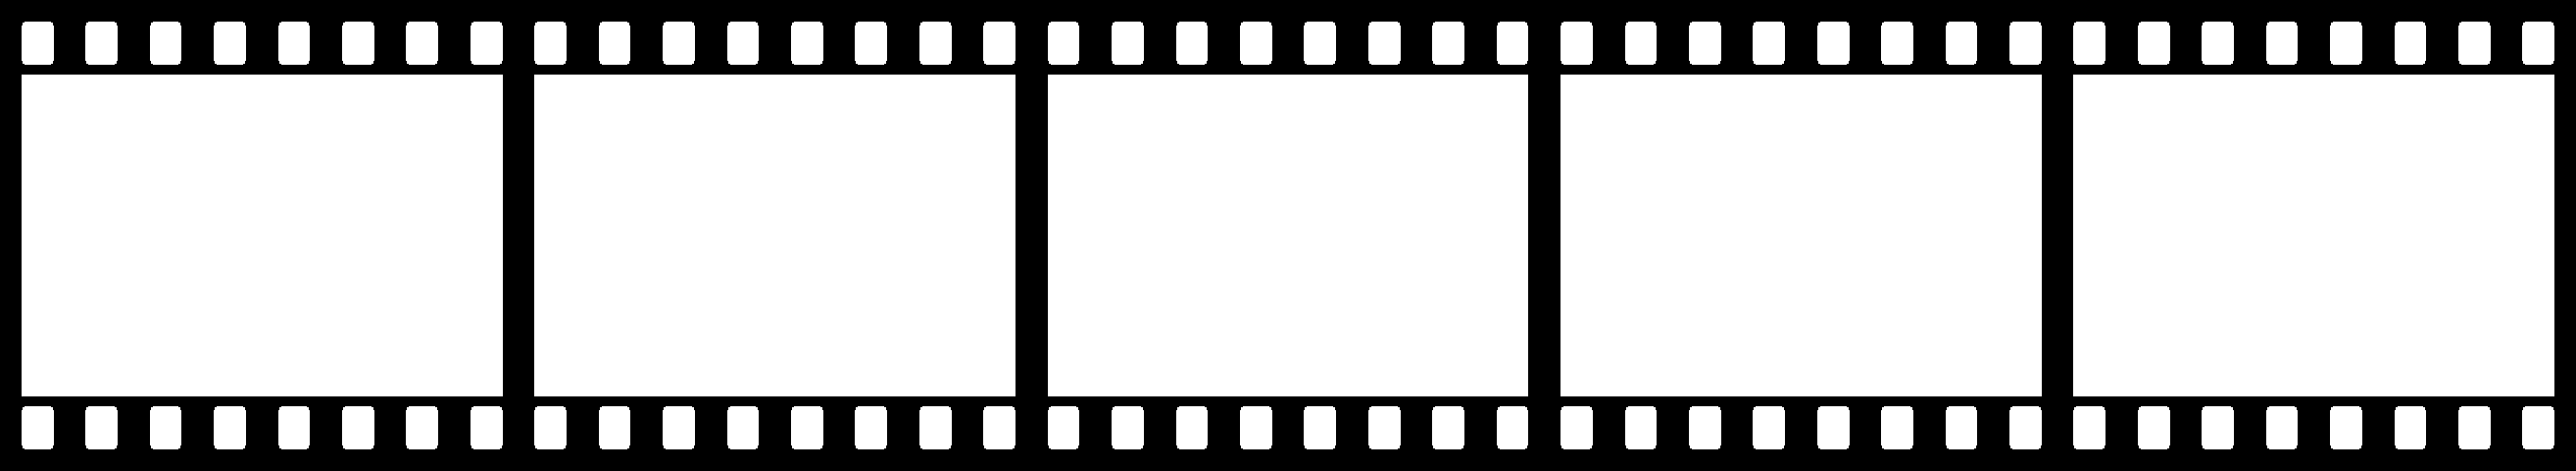 cinema clipart camera roll